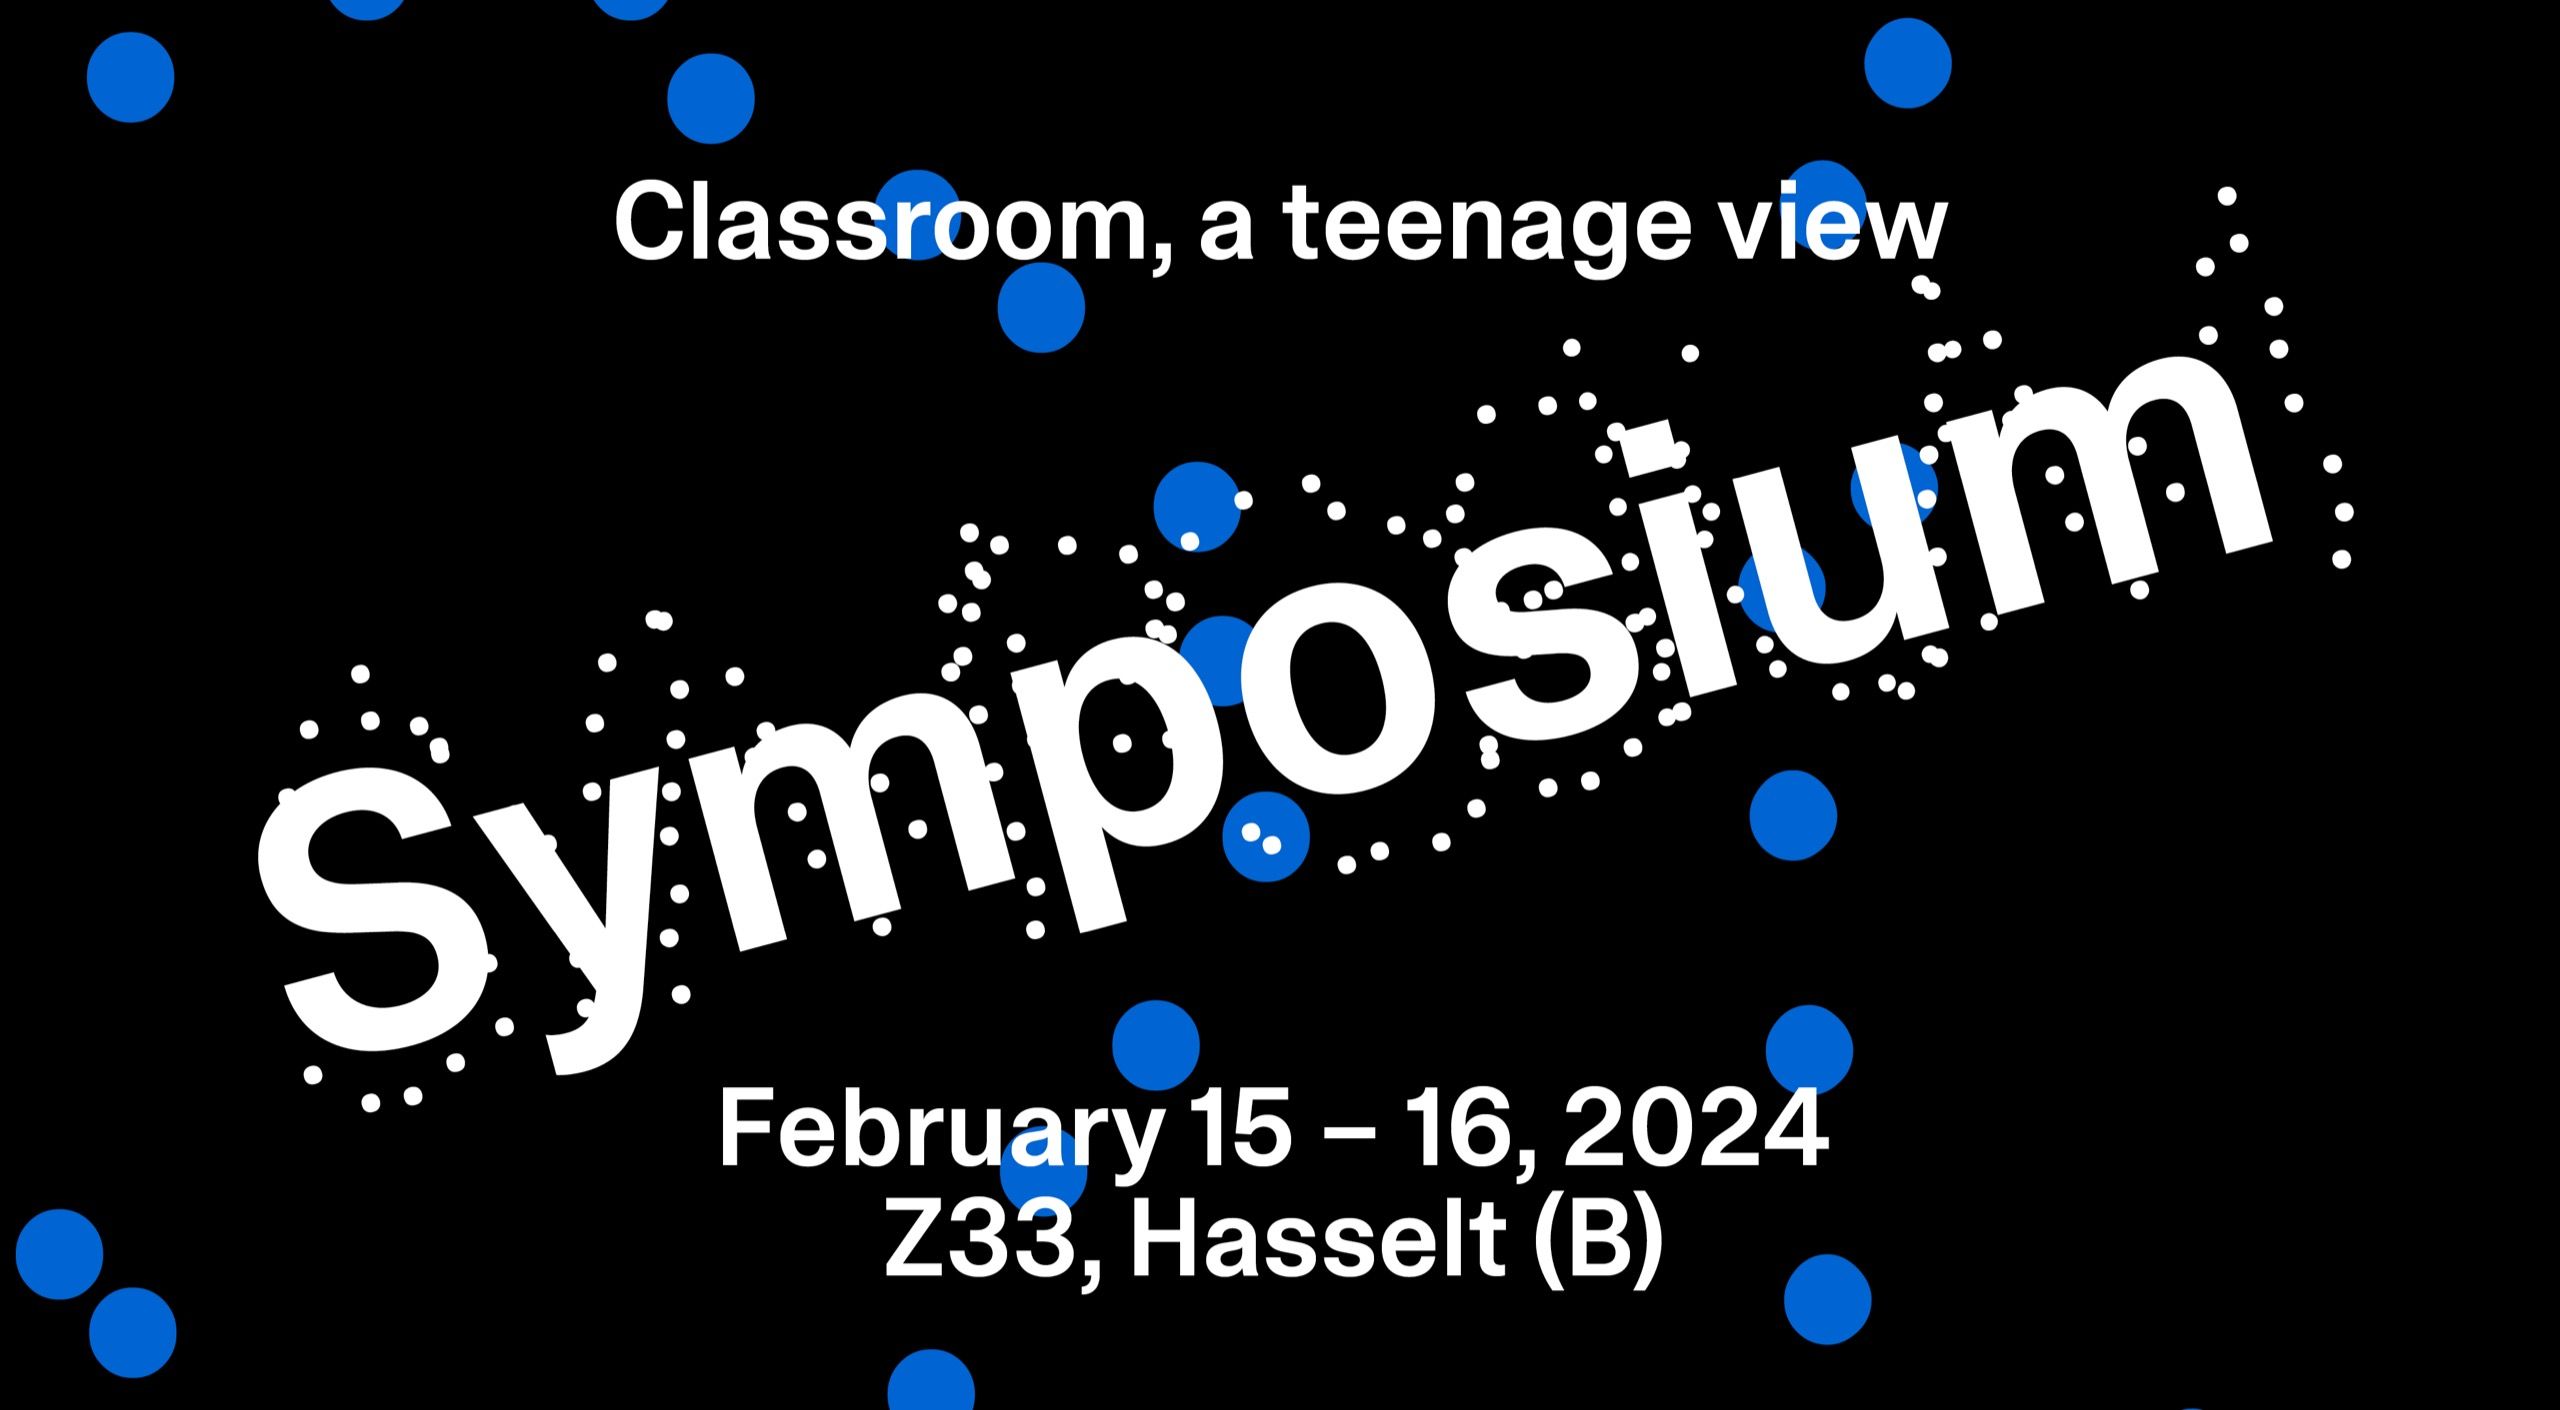 Z33 organiseert internationaal architectuur symposium: Classroom, a teenage view